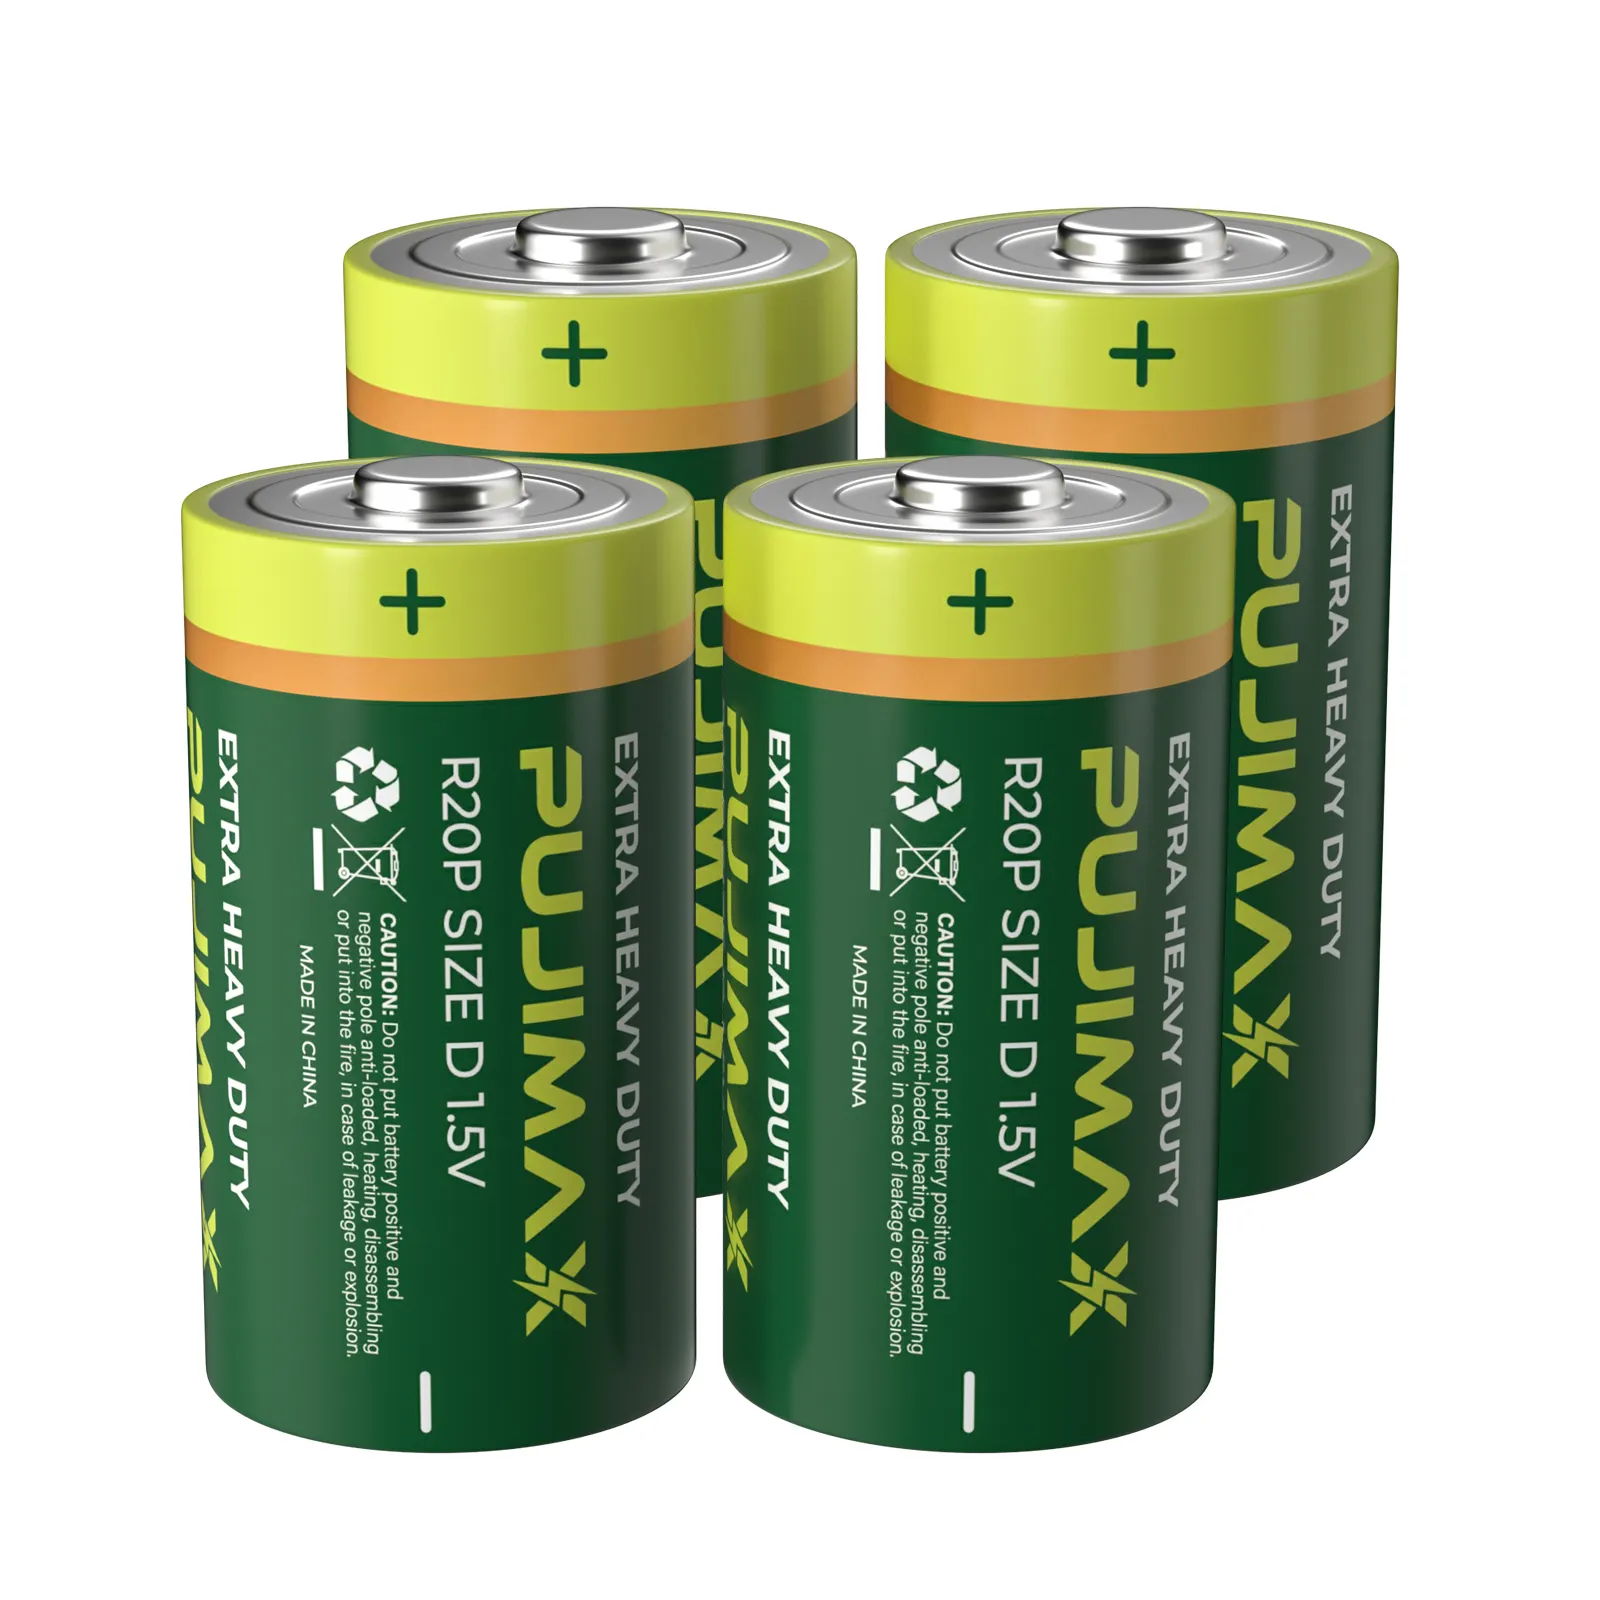 PUJIMAX 4 adet d boyutu 1.5v kuru pil r20p karbon ekstra ağır iş pili paket r20p d tipi gaz sobası piller 1.5v